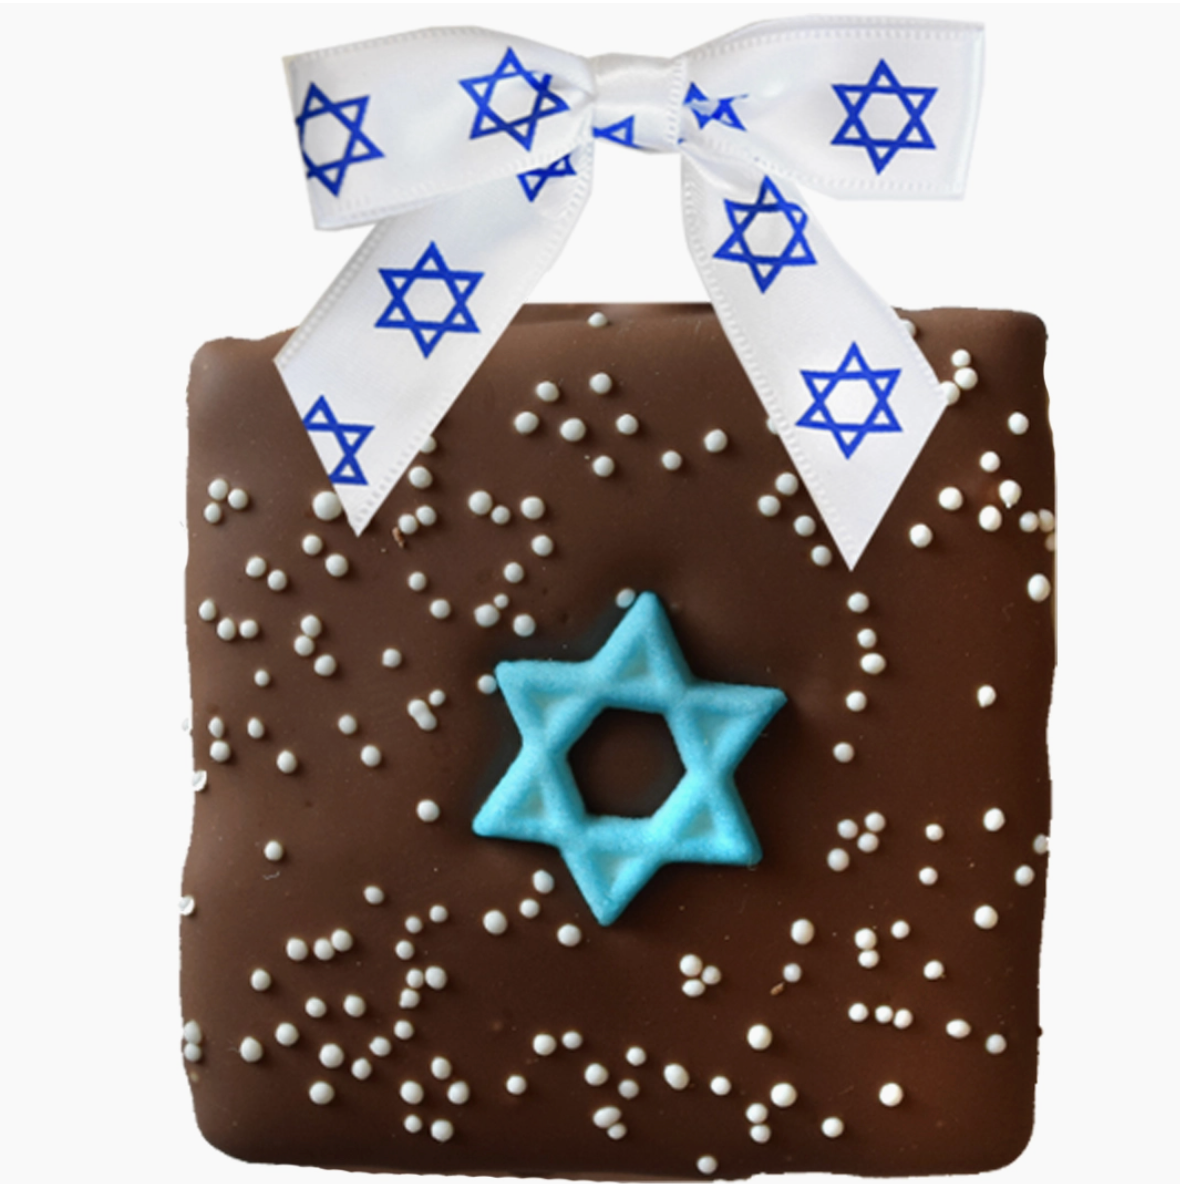 Hanukkah Two piece chocolate covered Graham Crackers